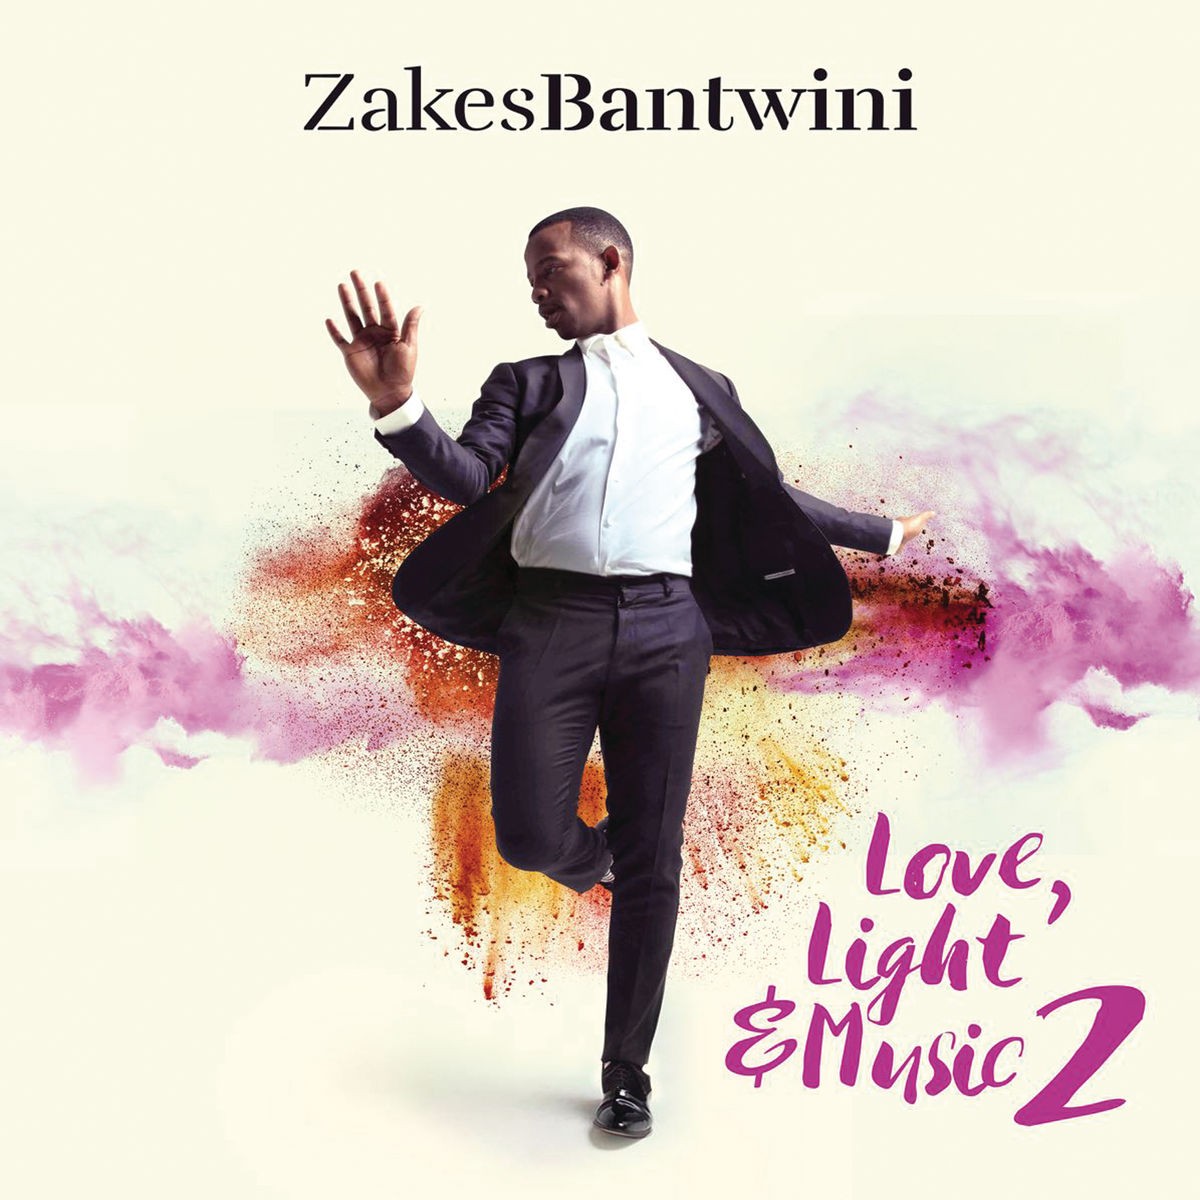 Love Light & Music 2 by Zakes Bantwini | Album